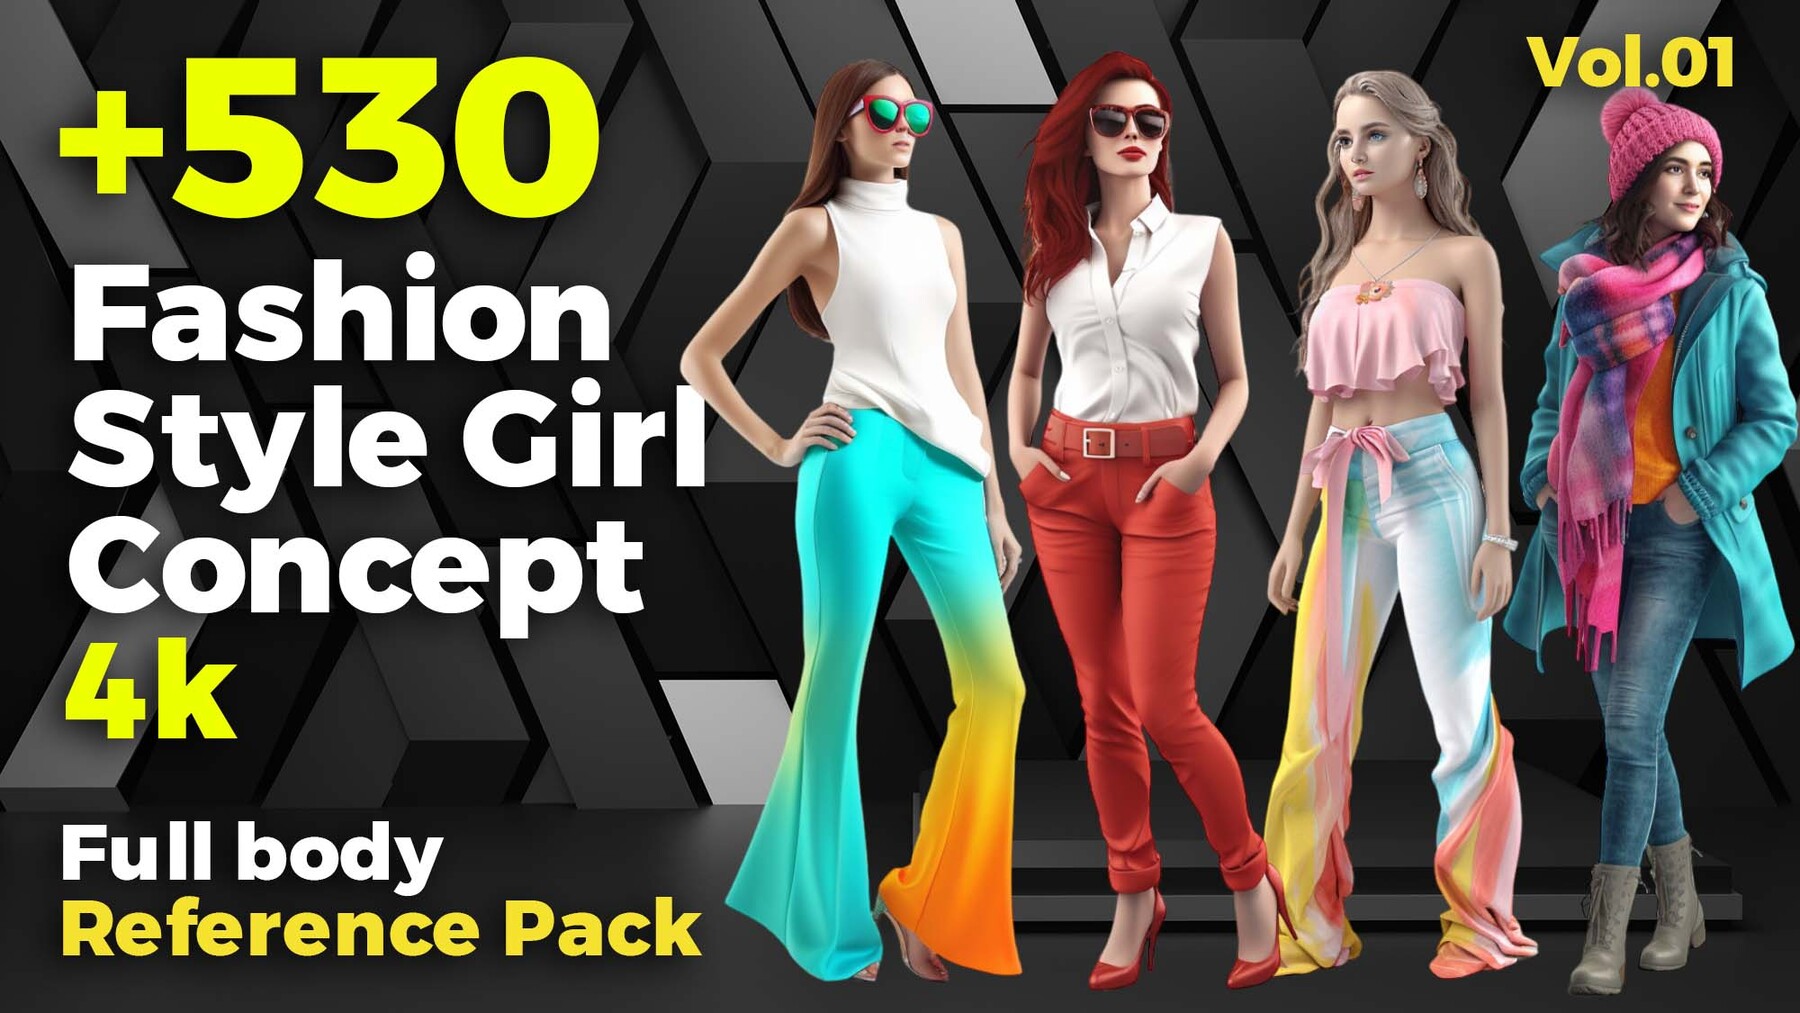 ArtStation - +250 Fashion Style Girl Concept (4k)